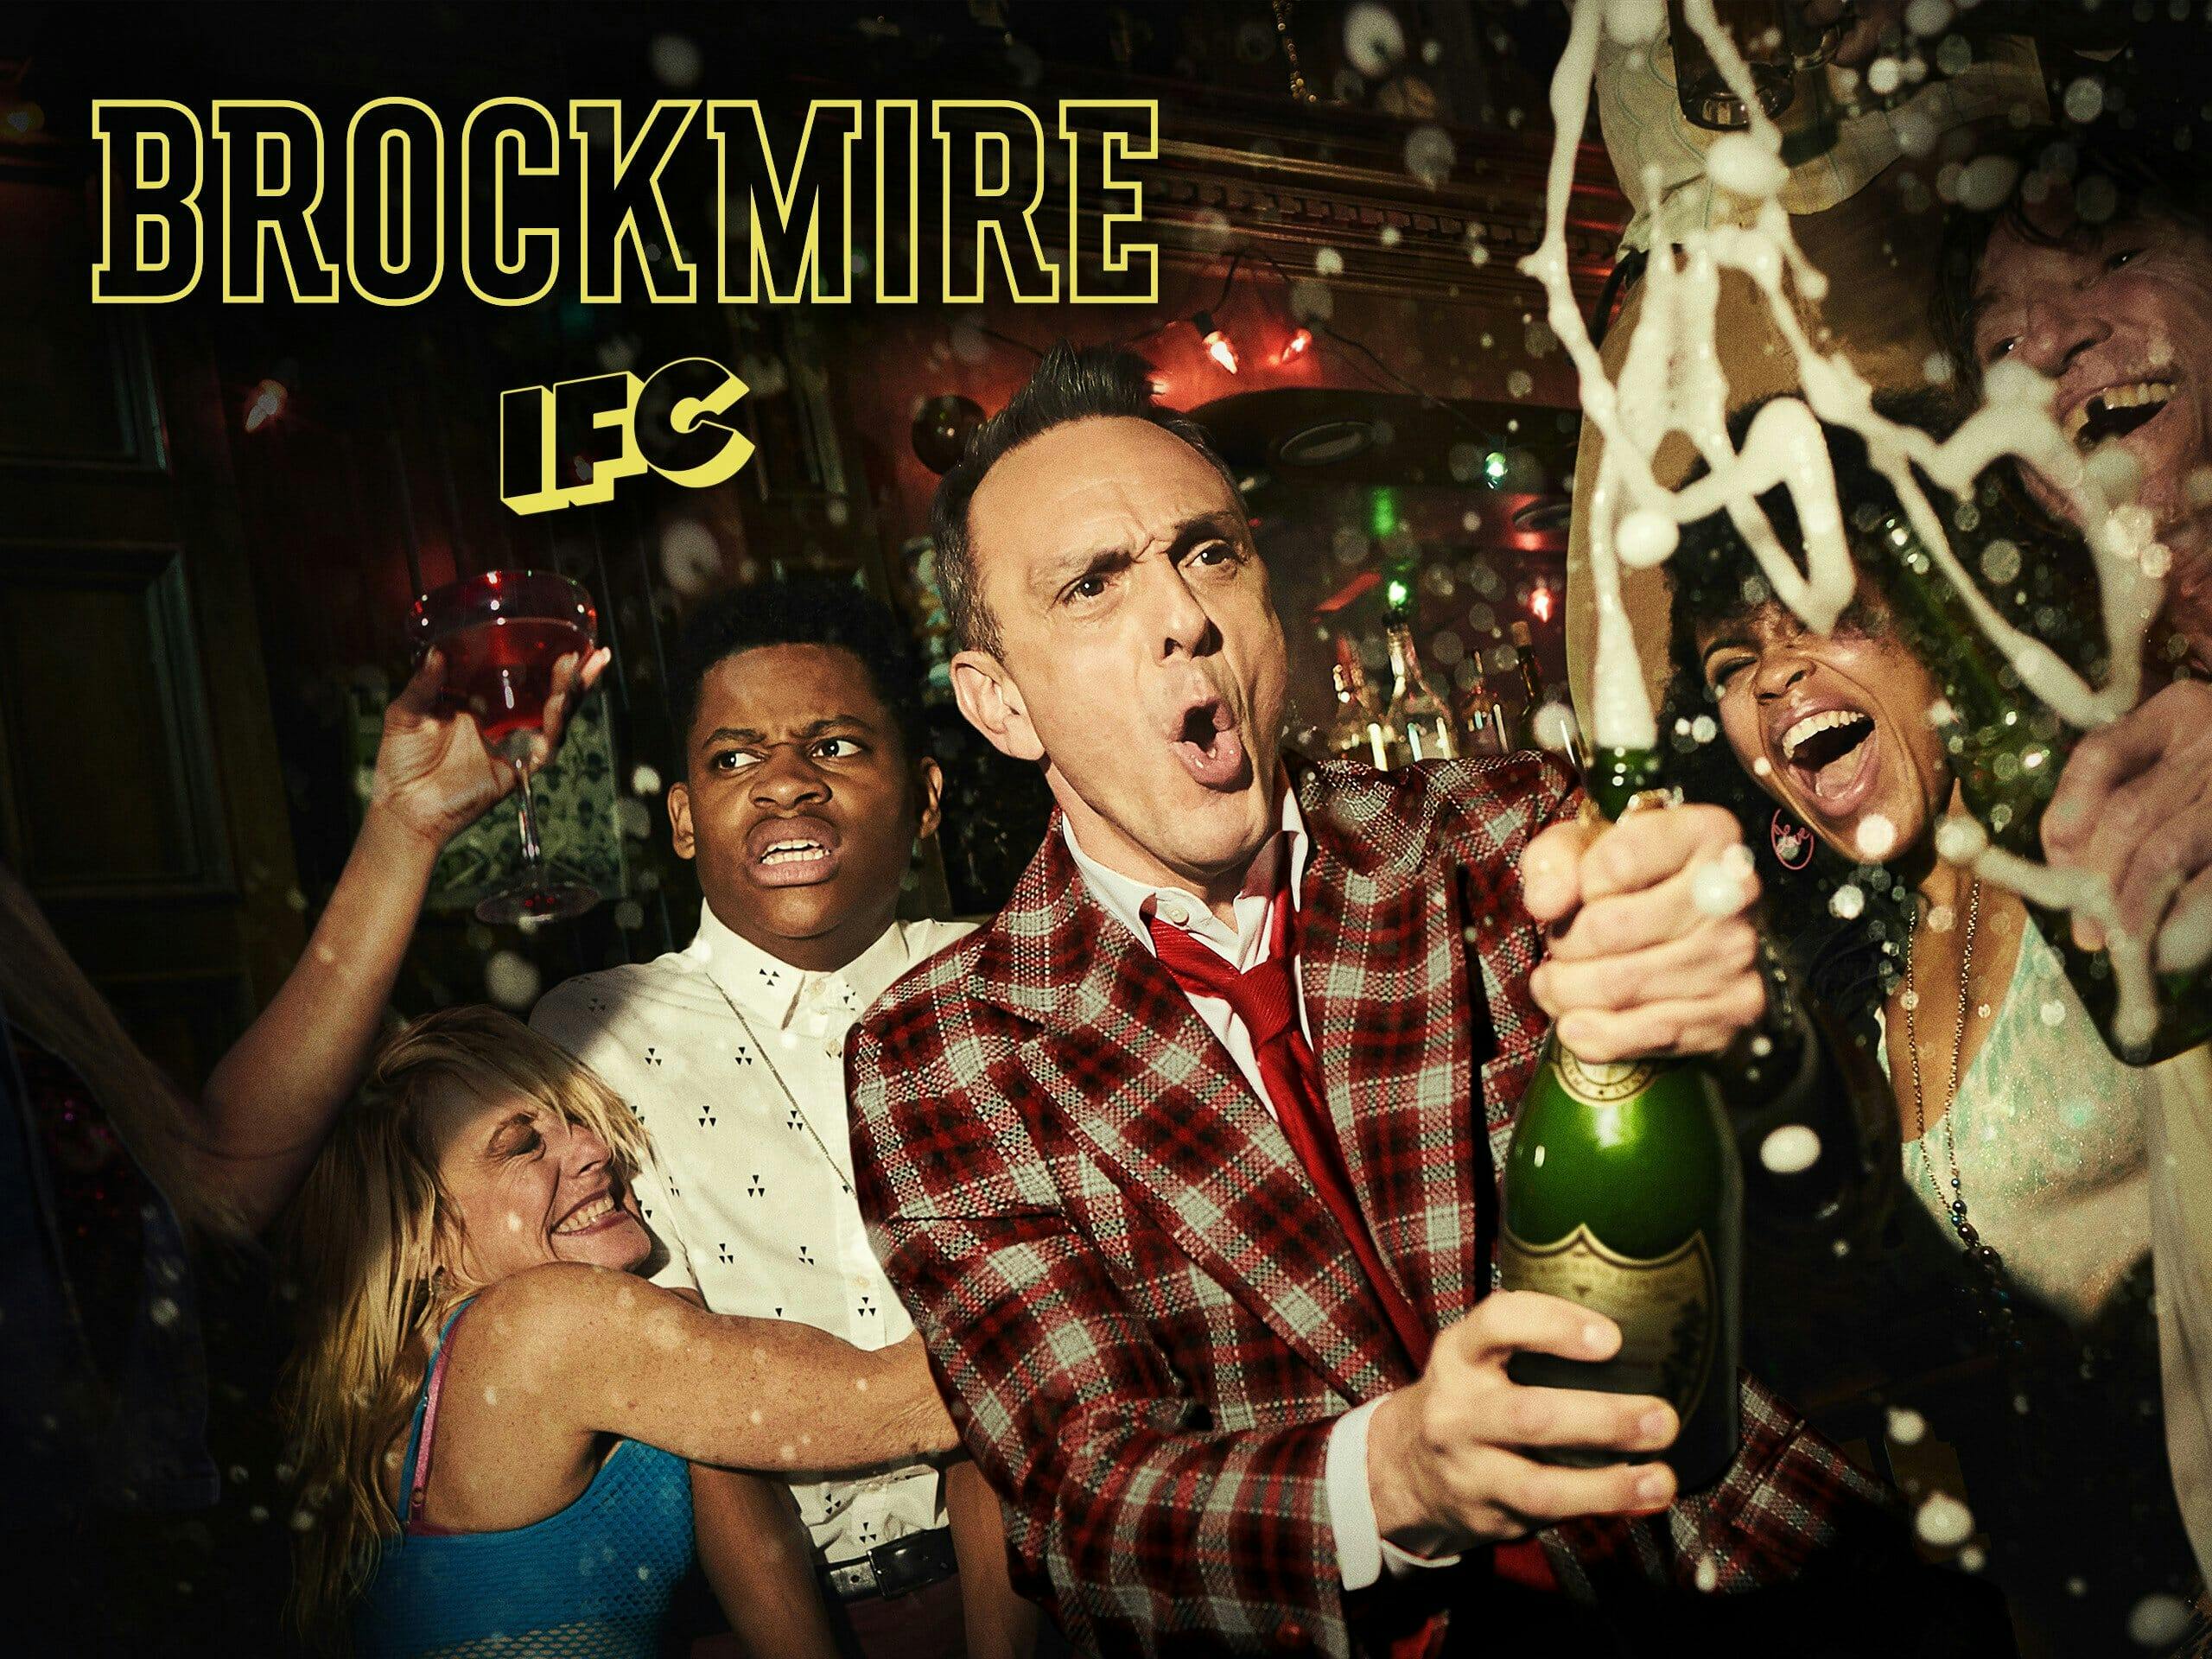 watch brockmire season 3 online free on amazon